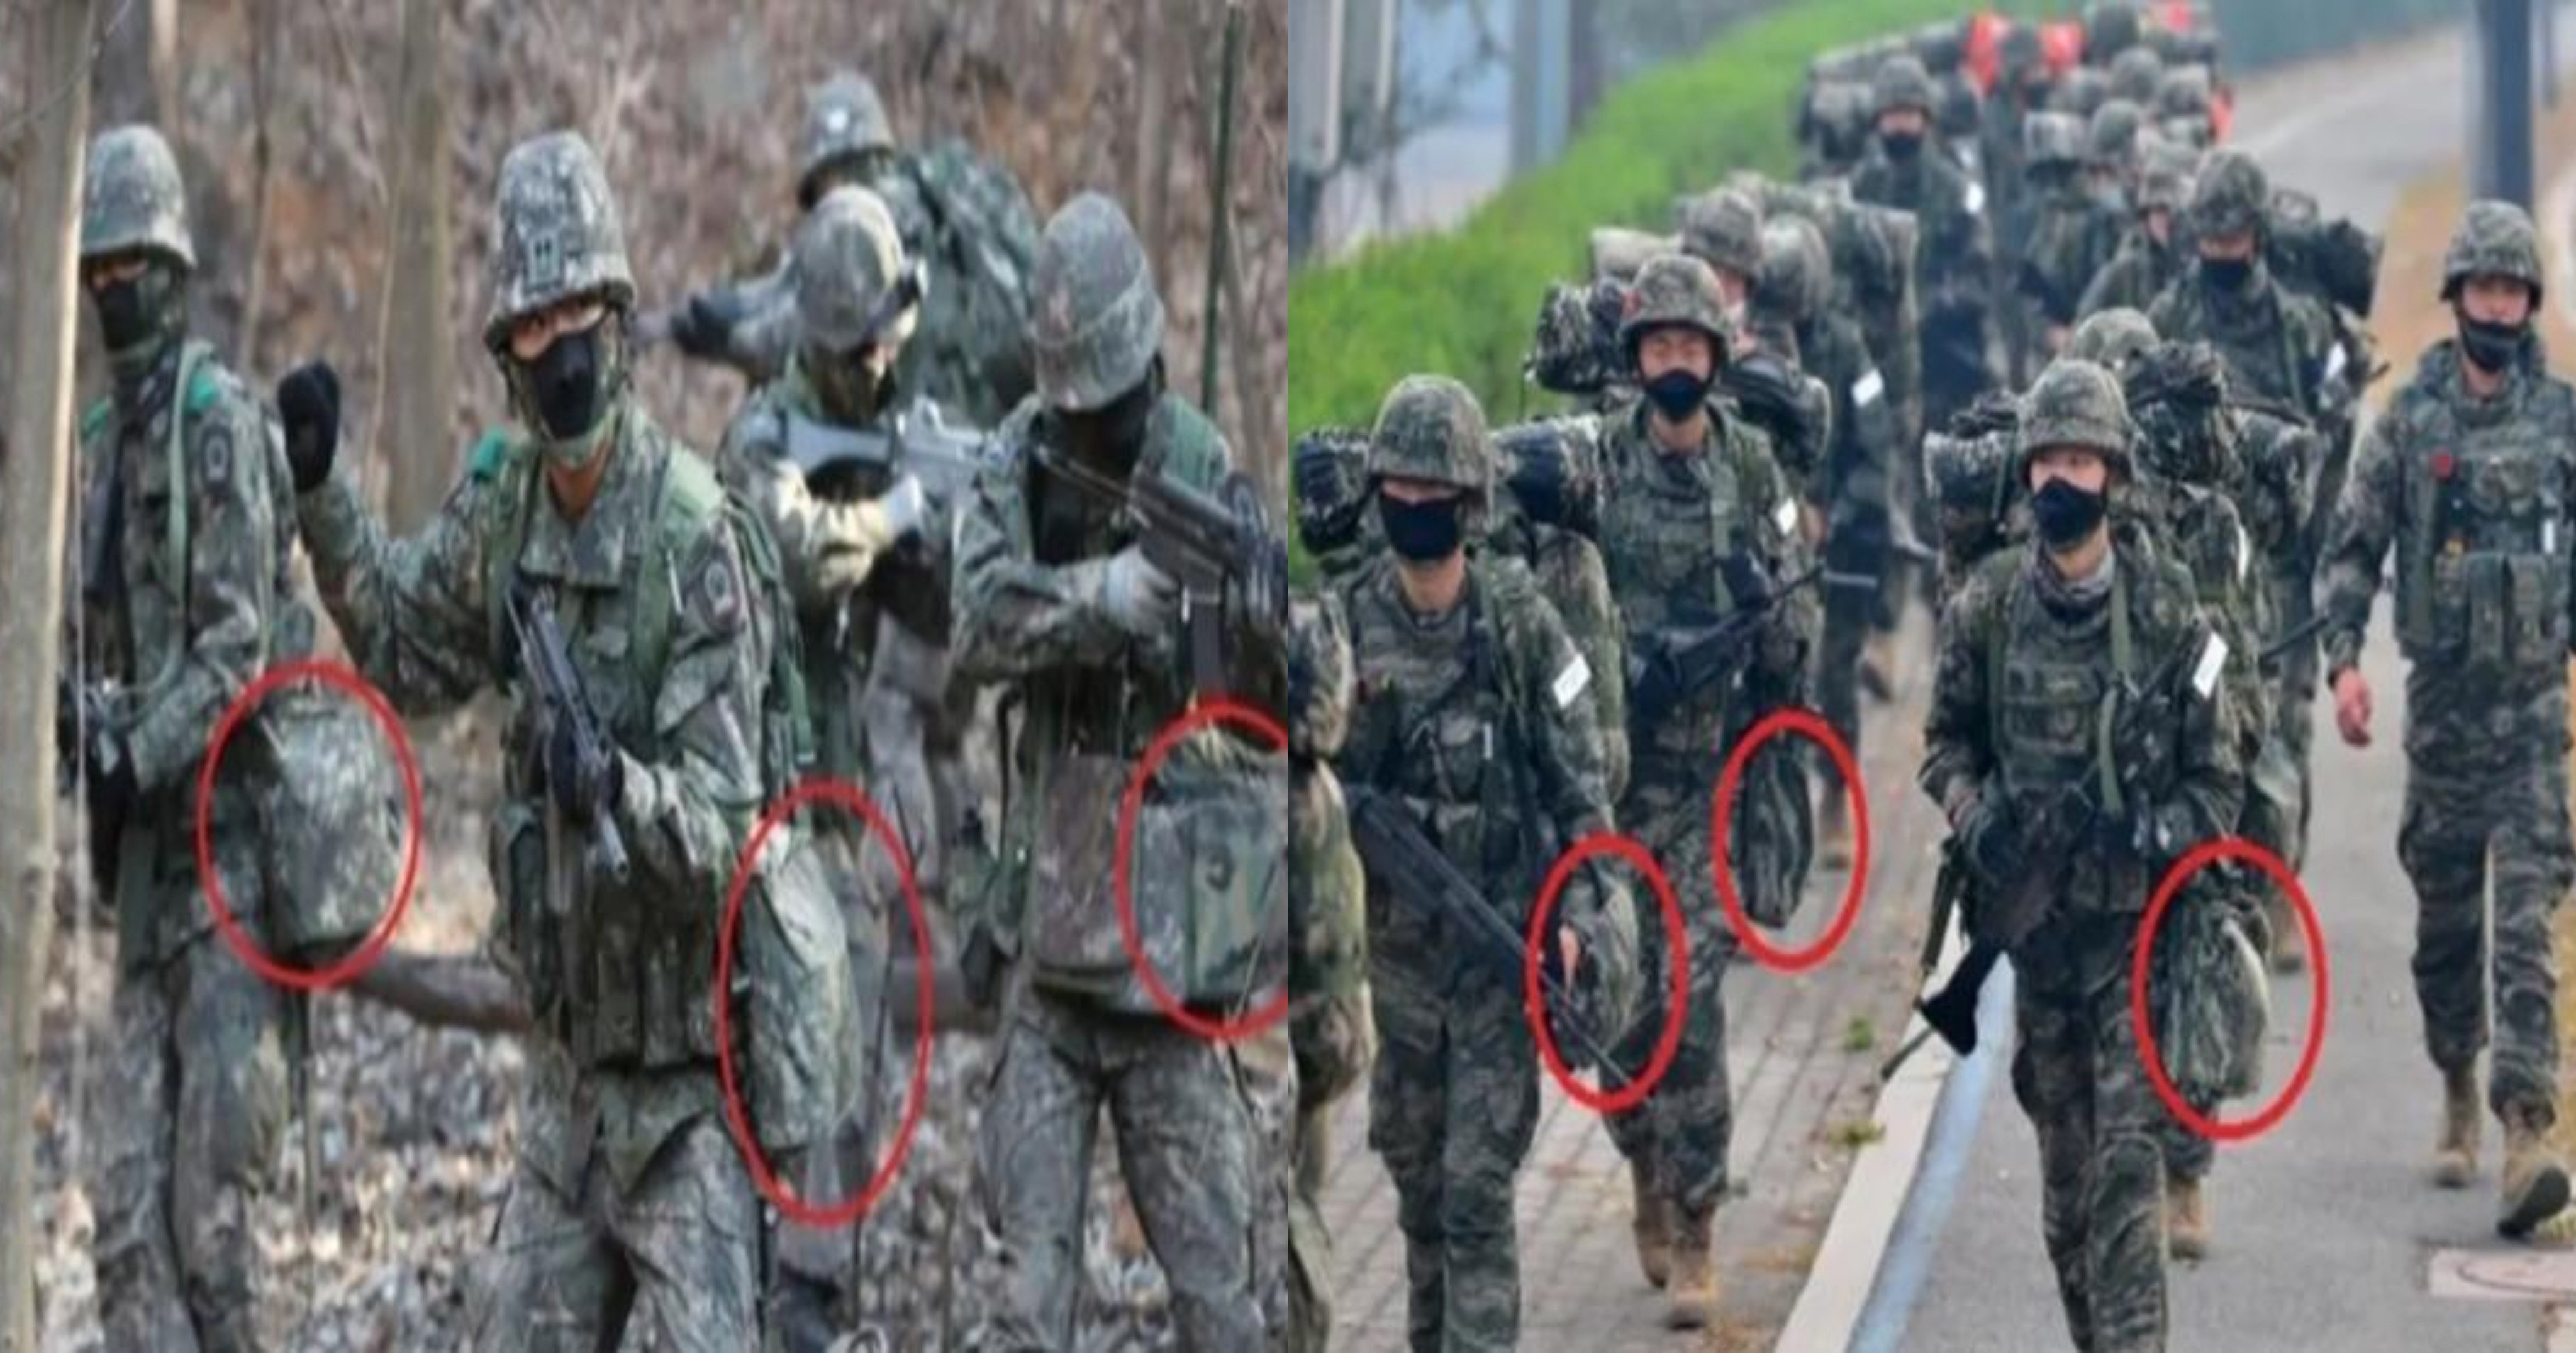 695a53af e95c 4129 a09f 72d45356bbca.jpeg?resize=412,275 - 서양 밀덕들이 한국 군인들 사진을 보고 너무 궁금증 폭발하는 이유